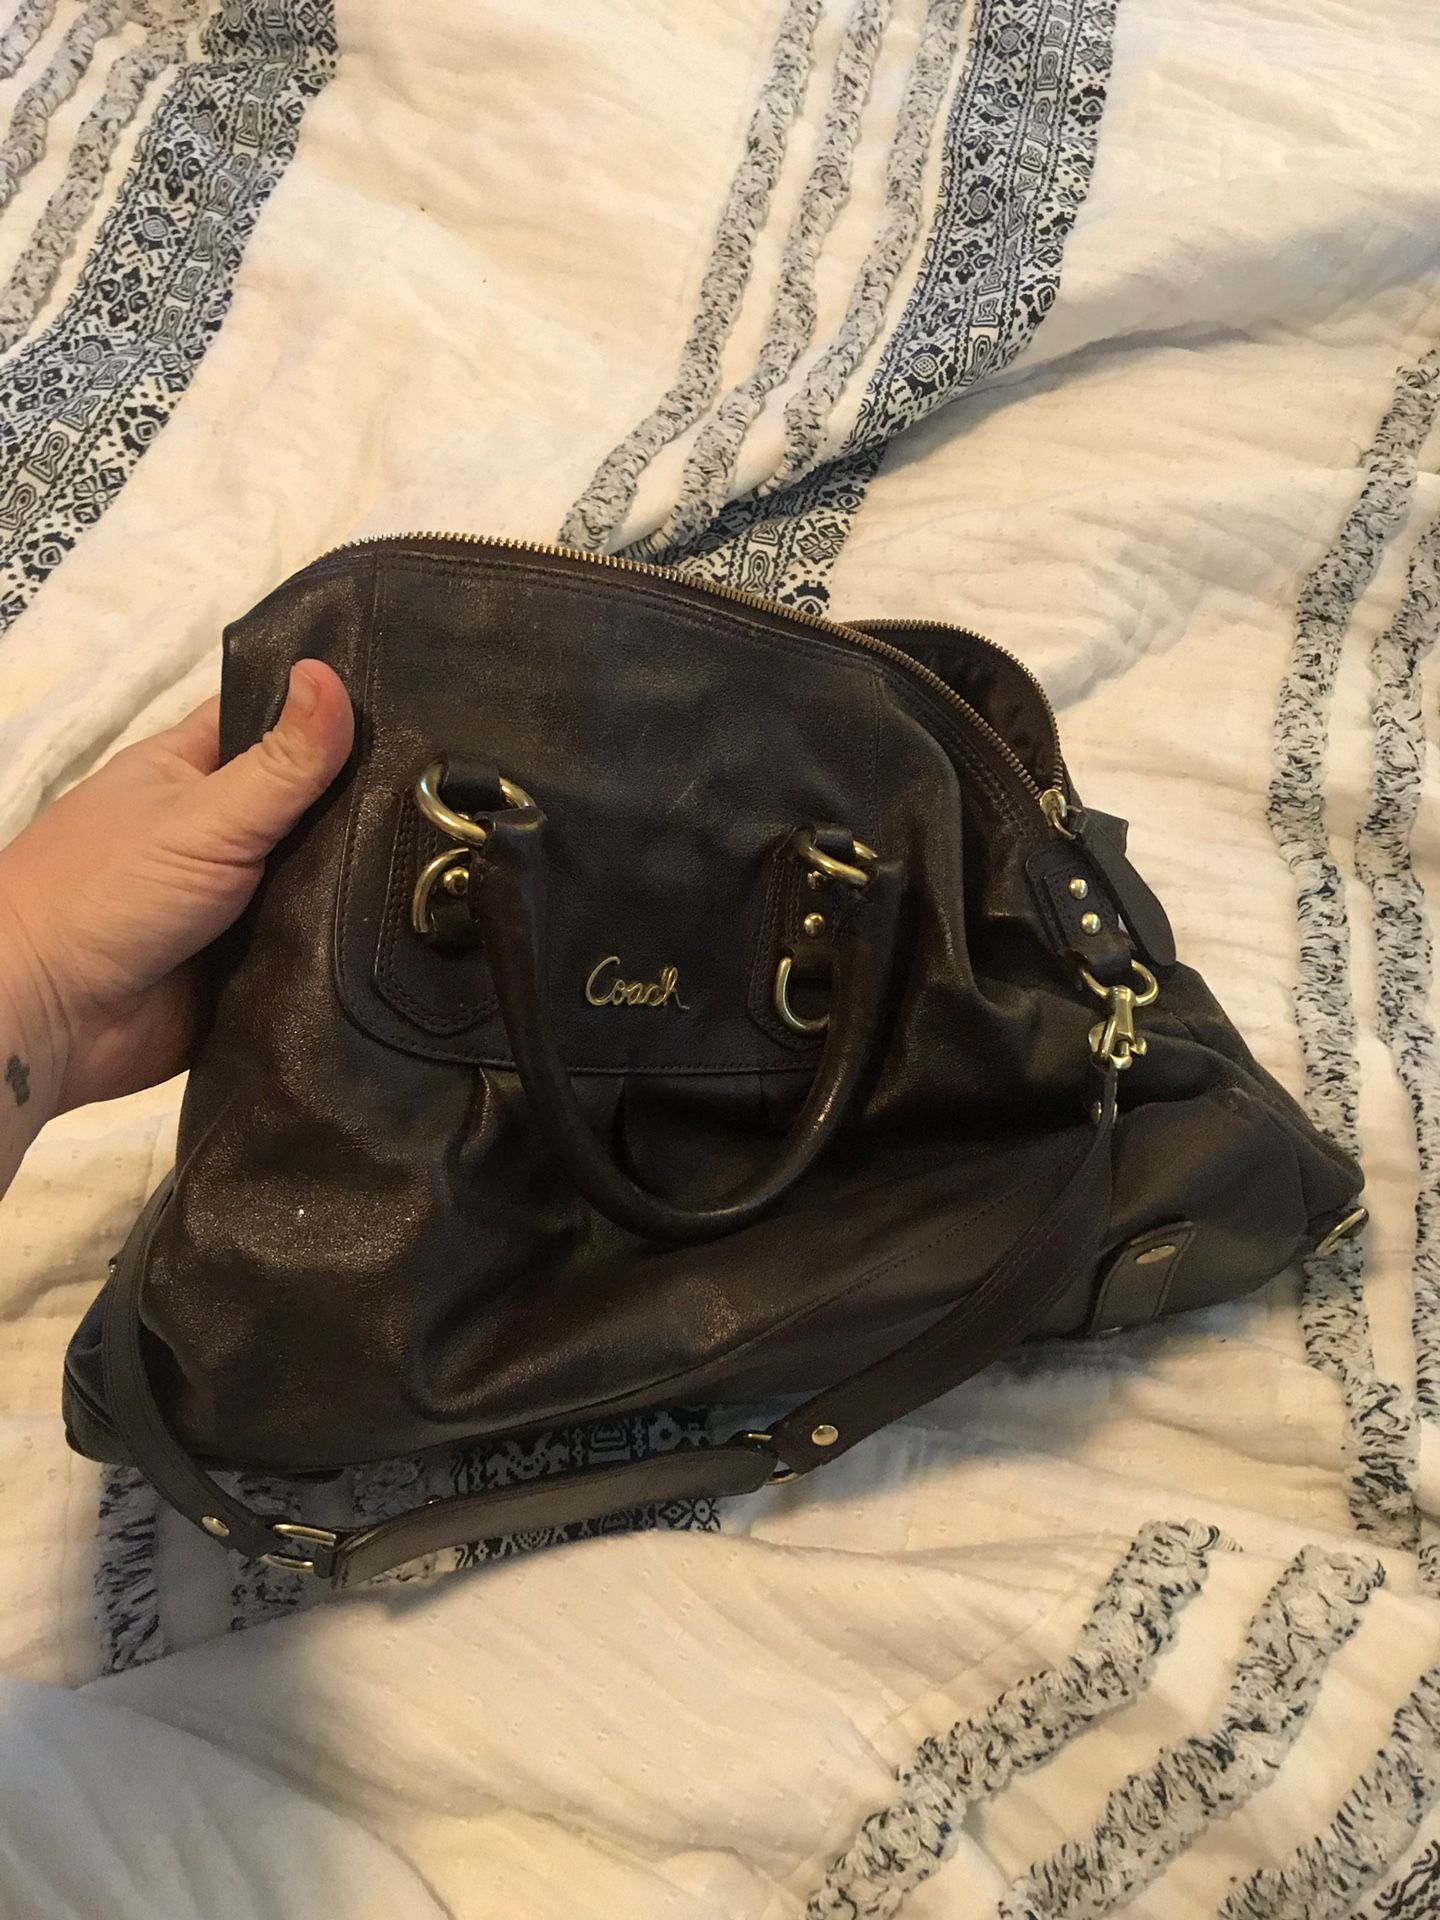 Coach black medium purse. Great condition.